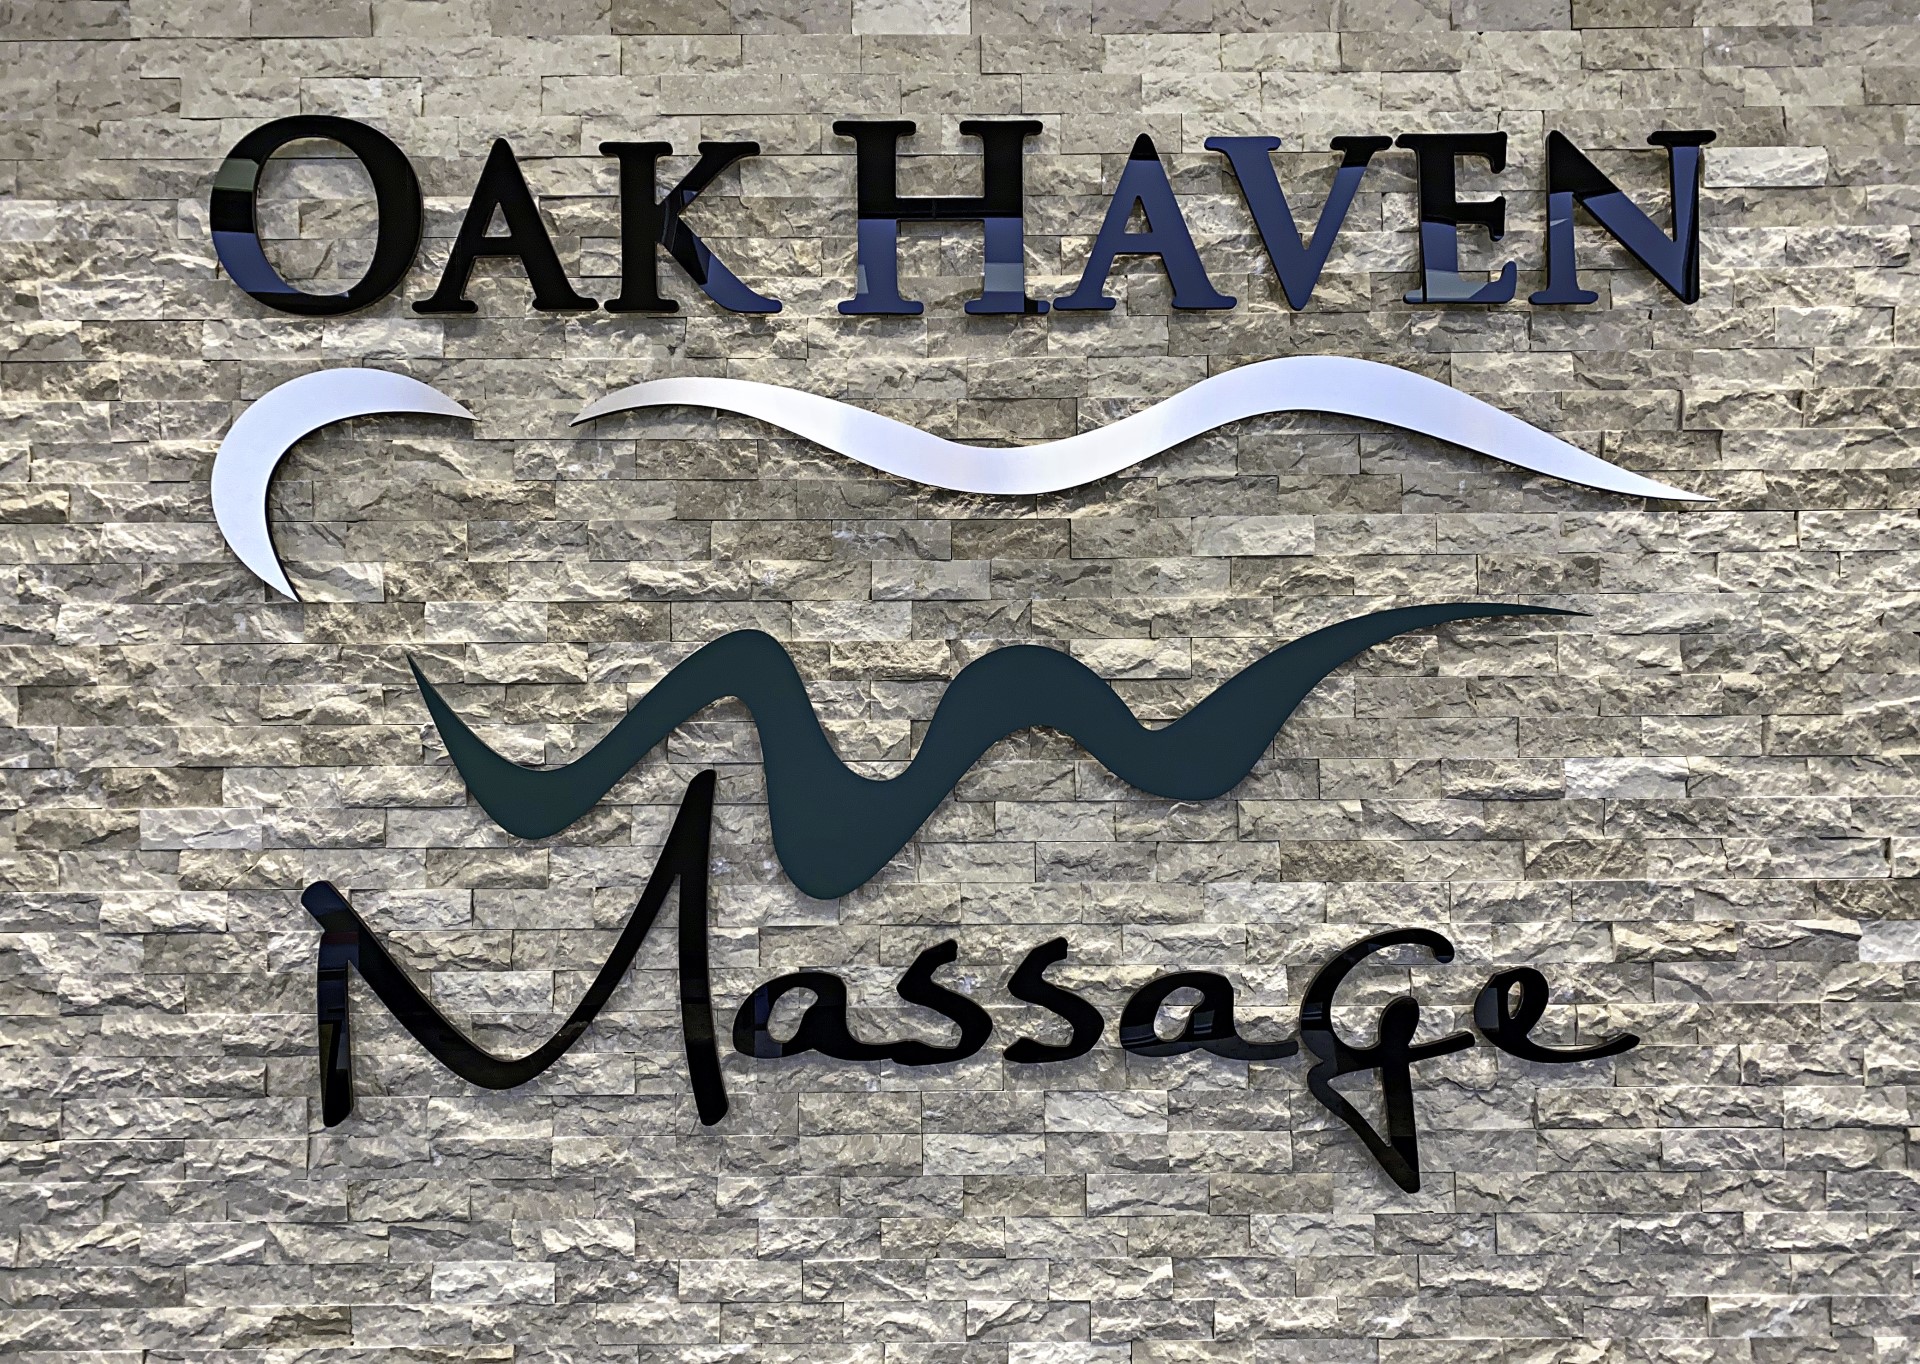 oak haven massage